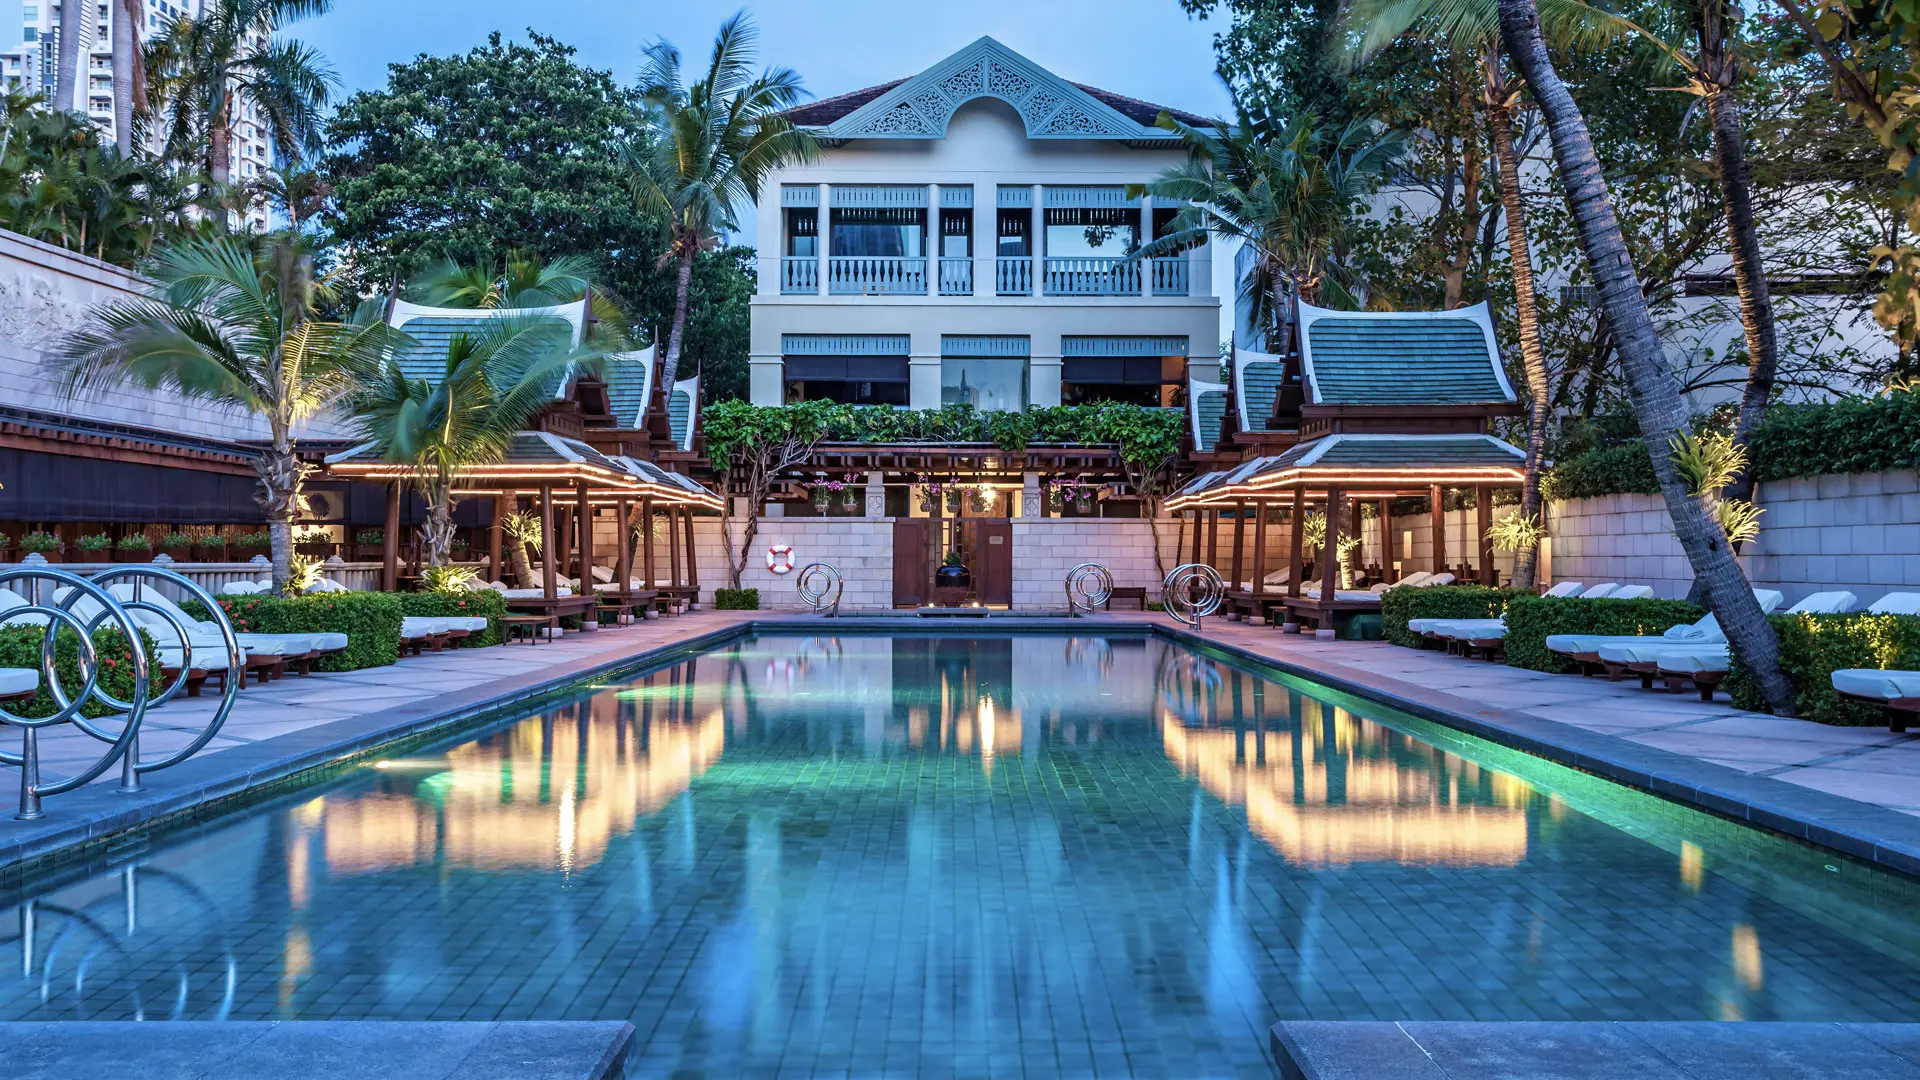 Hotel review Service & Facilities' - The Peninsula Bangkok - 1